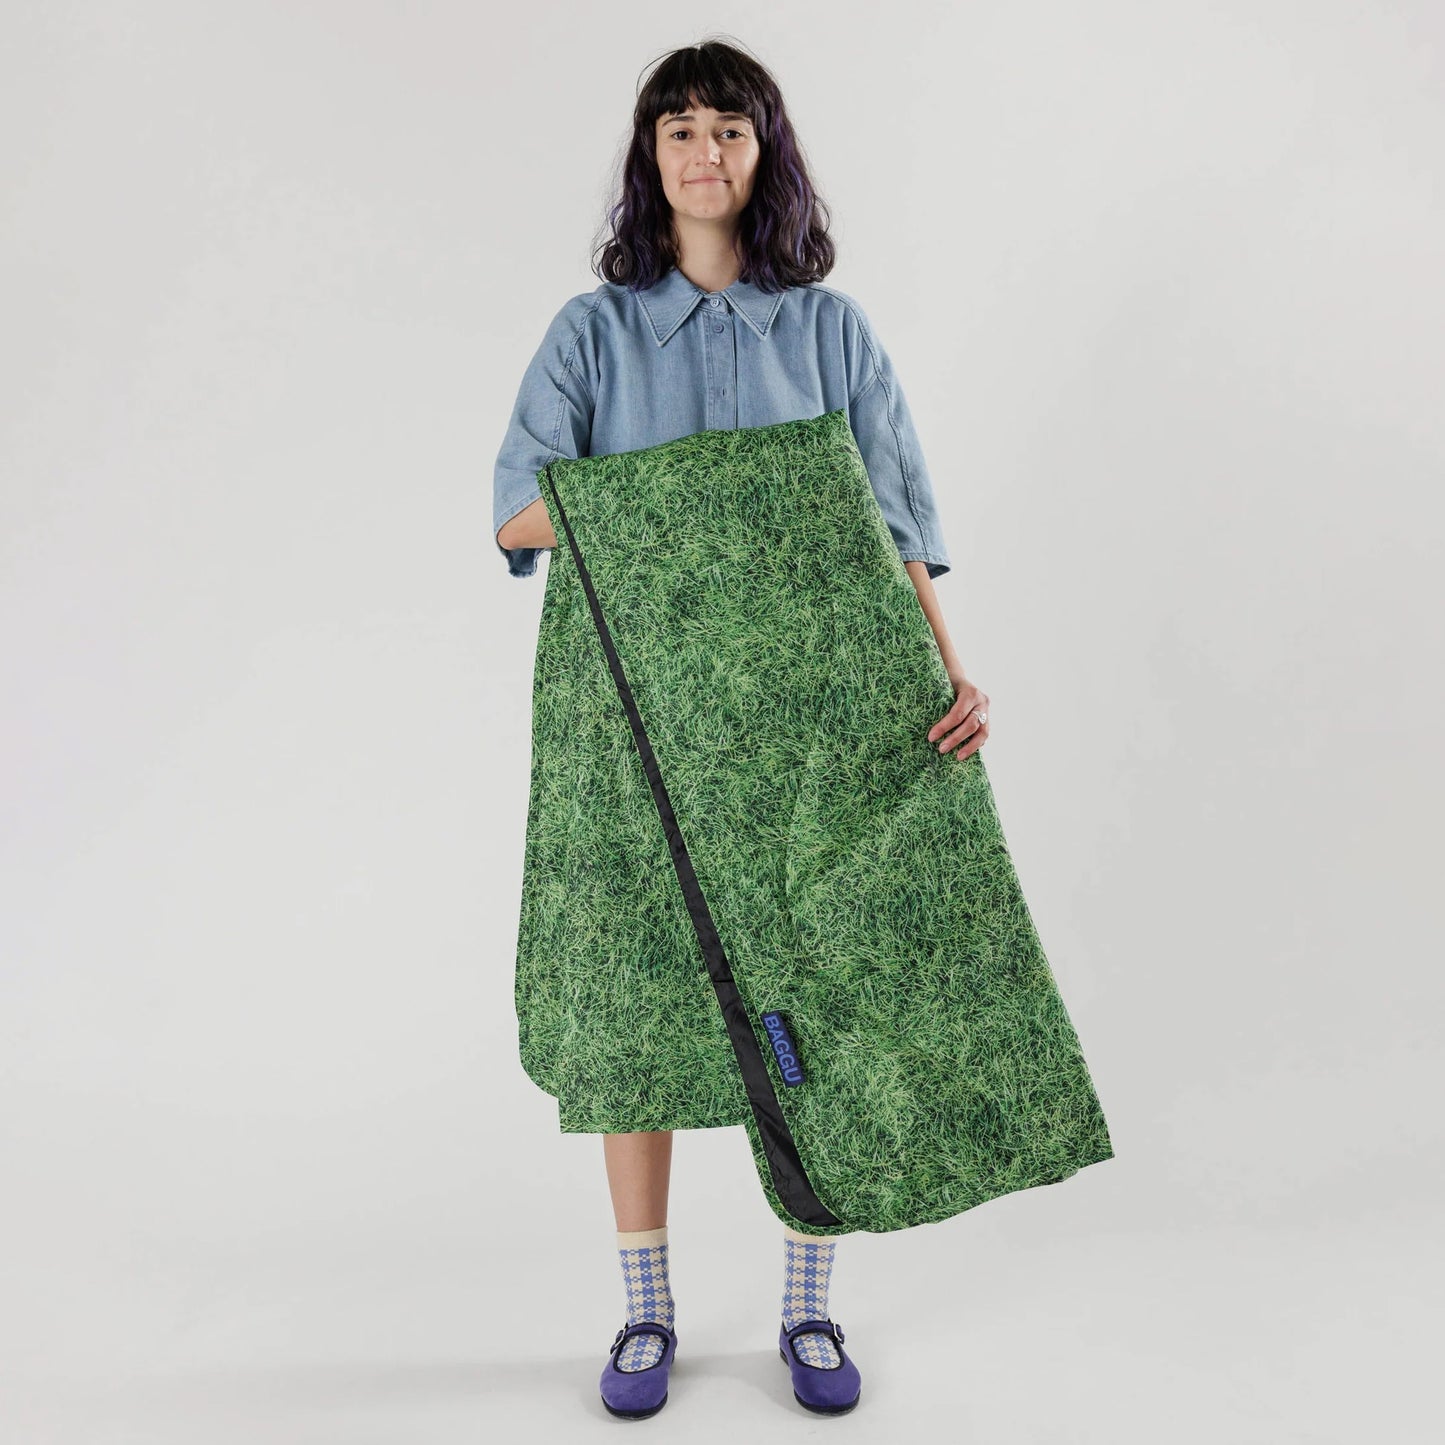 BAGGU Puffy Picnic Blanket: Grass